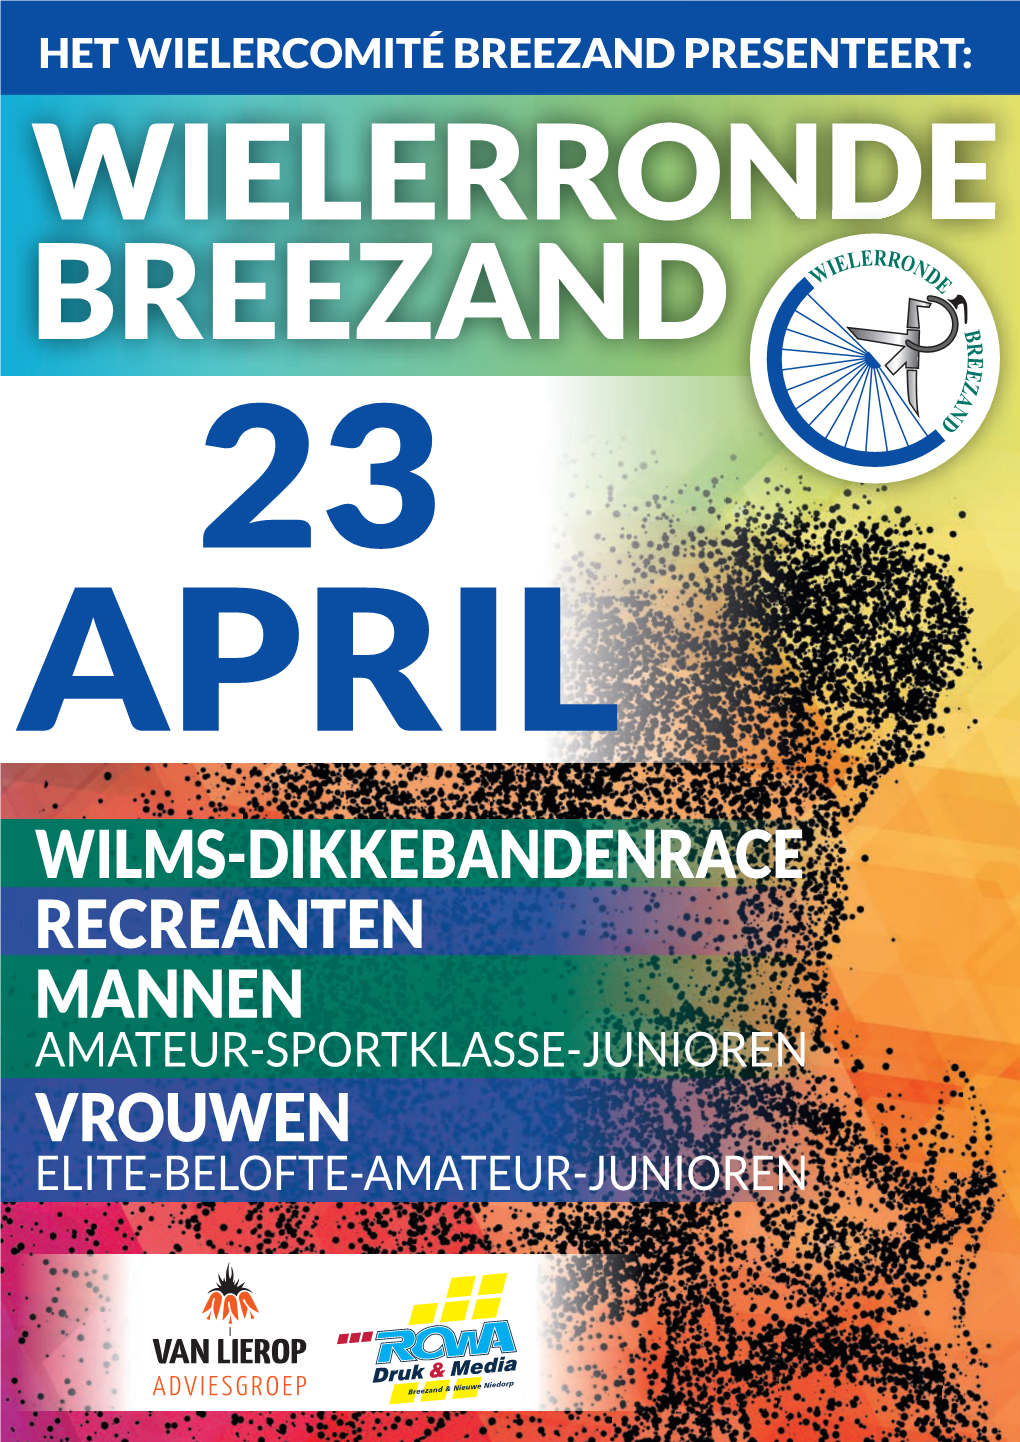 Wielerronde Breezand 23 April Wilms-Dikkebandenrace Recreanten Mannen Amateur-Sportklasse-Junioren Vrouwen Elite-Belofte-Amateur-Junioren